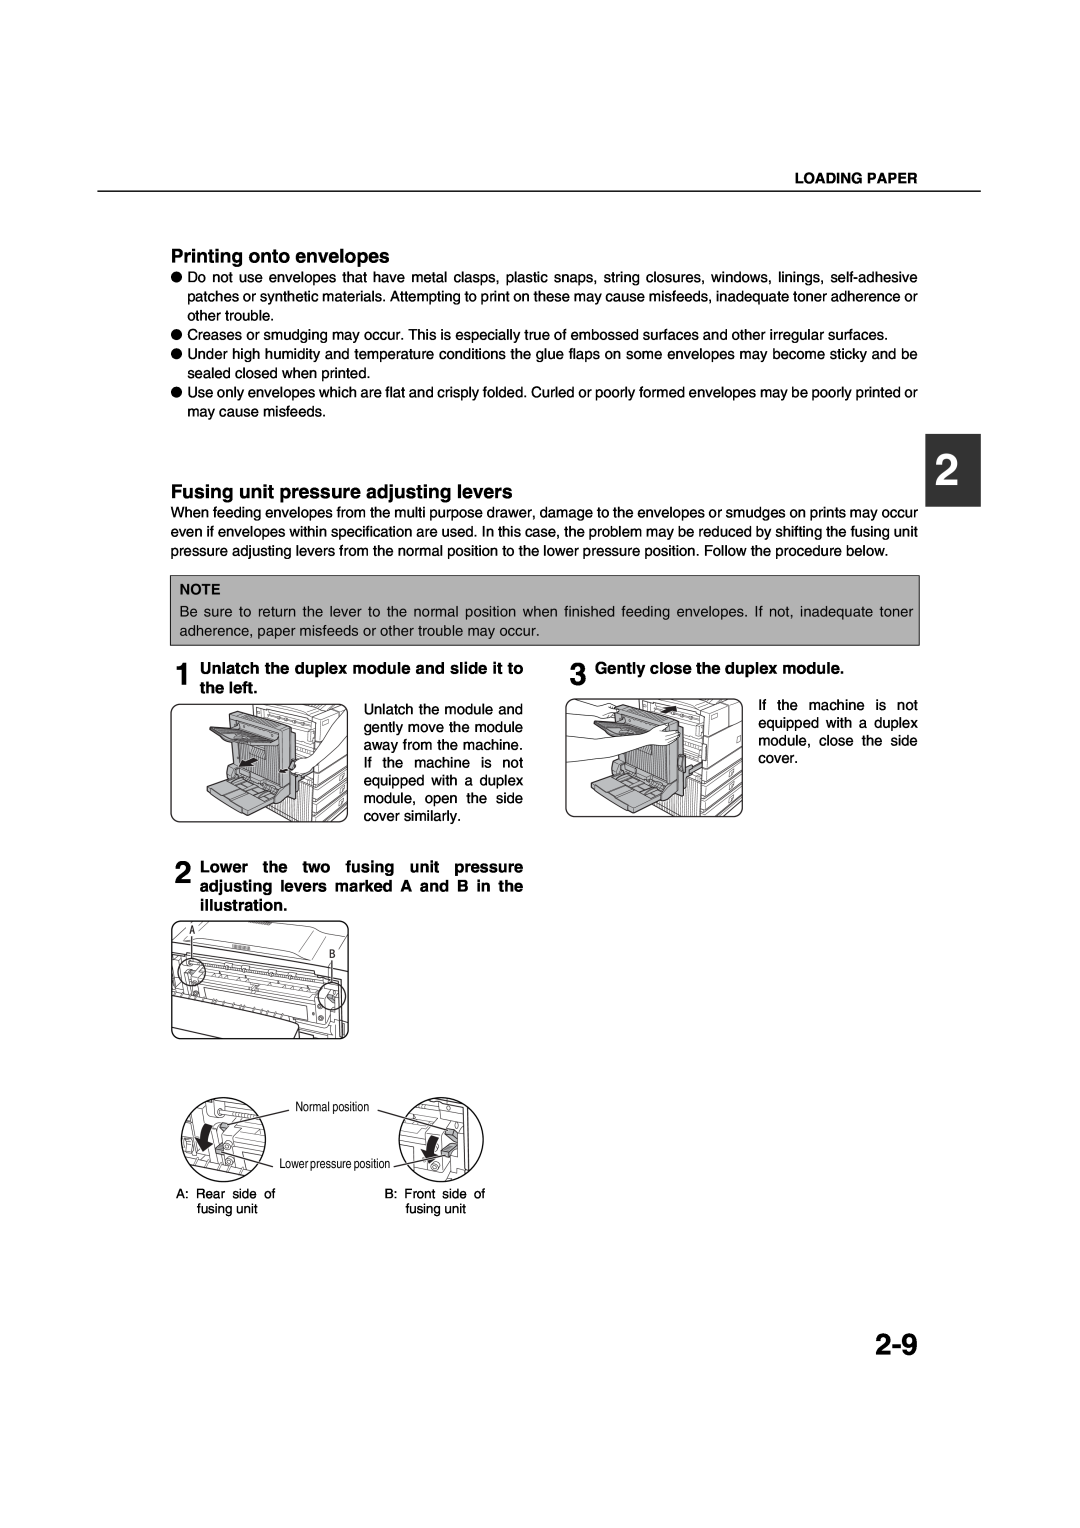 Sharp AR-M451N Printing onto envelopes, Fusing unit pressure adjusting levers, Gently close the duplex module 